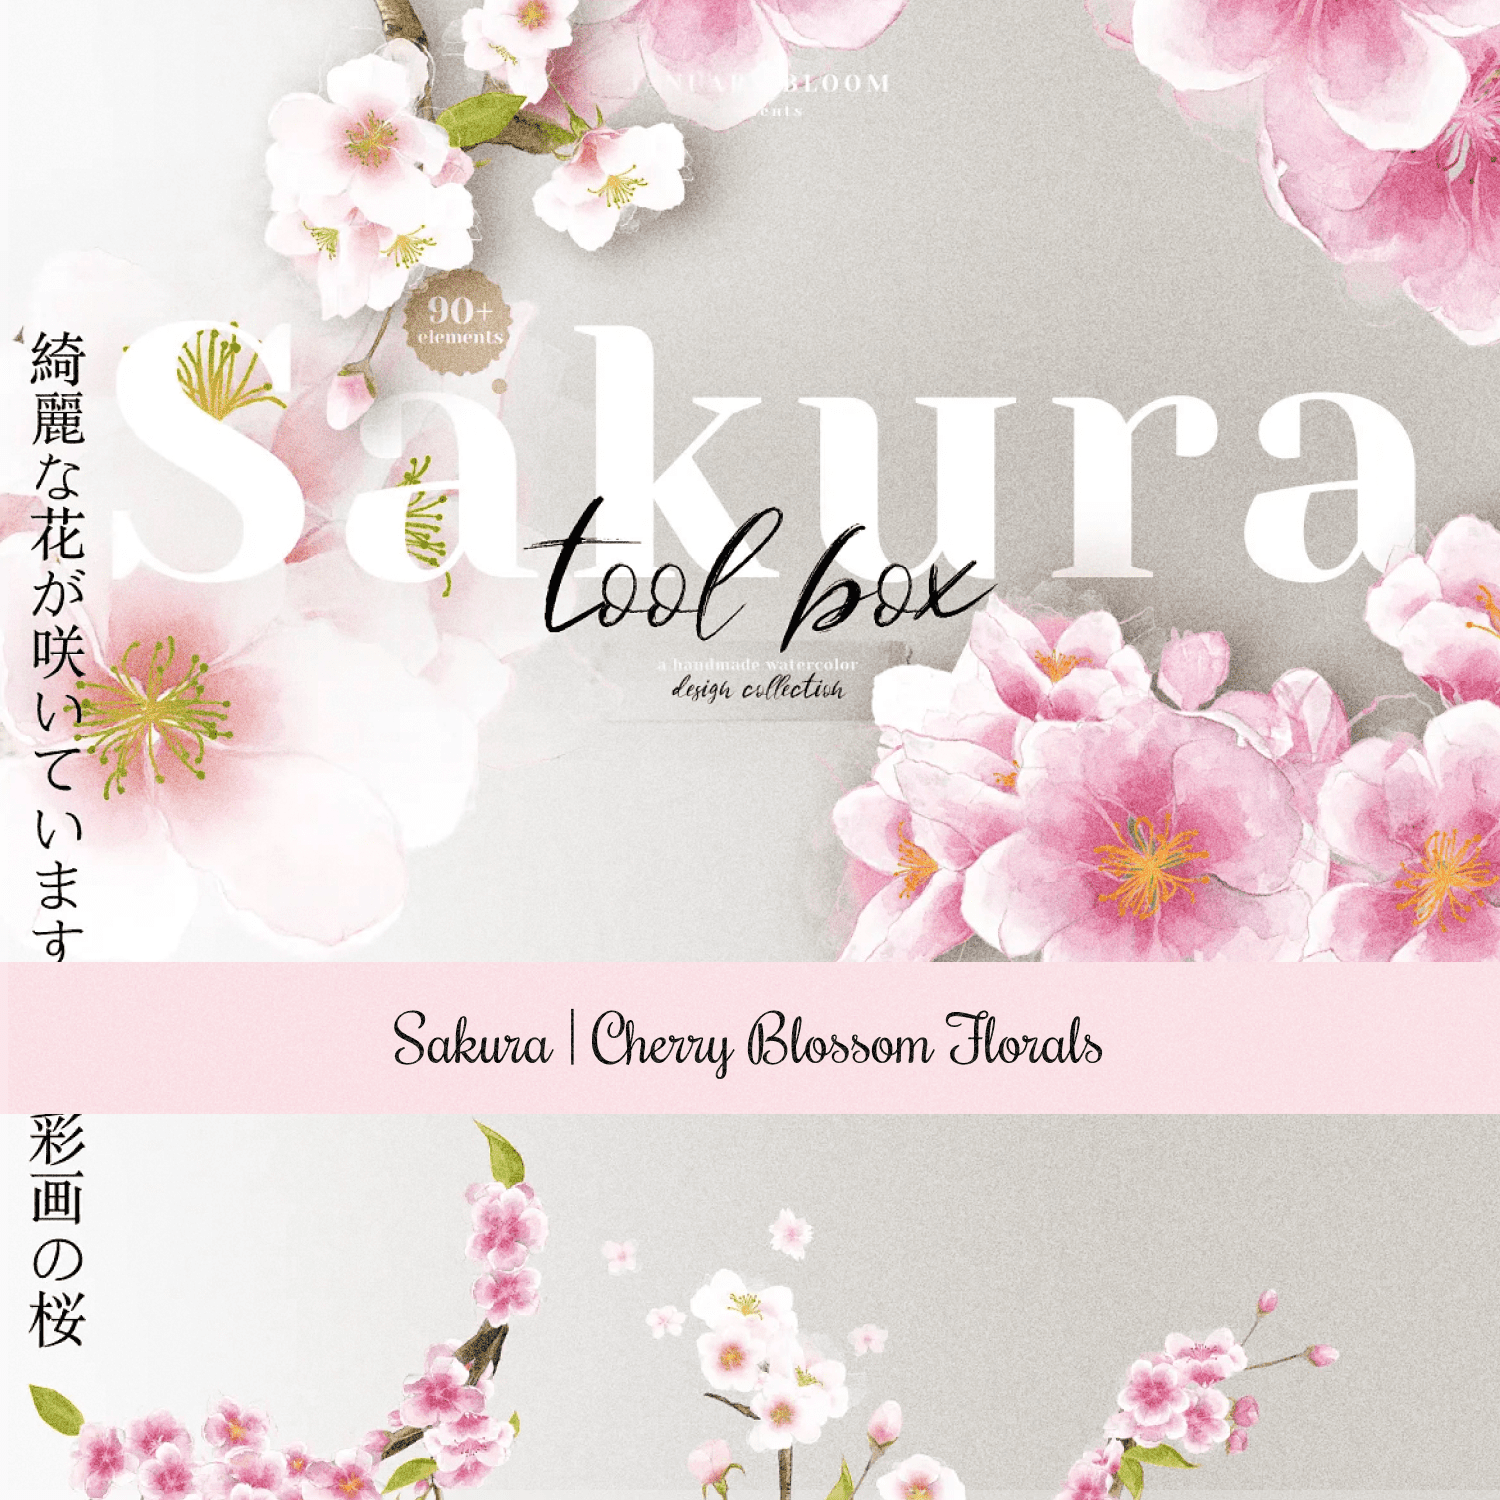 Sakura | Cherry Blossom Florals - main image preview.